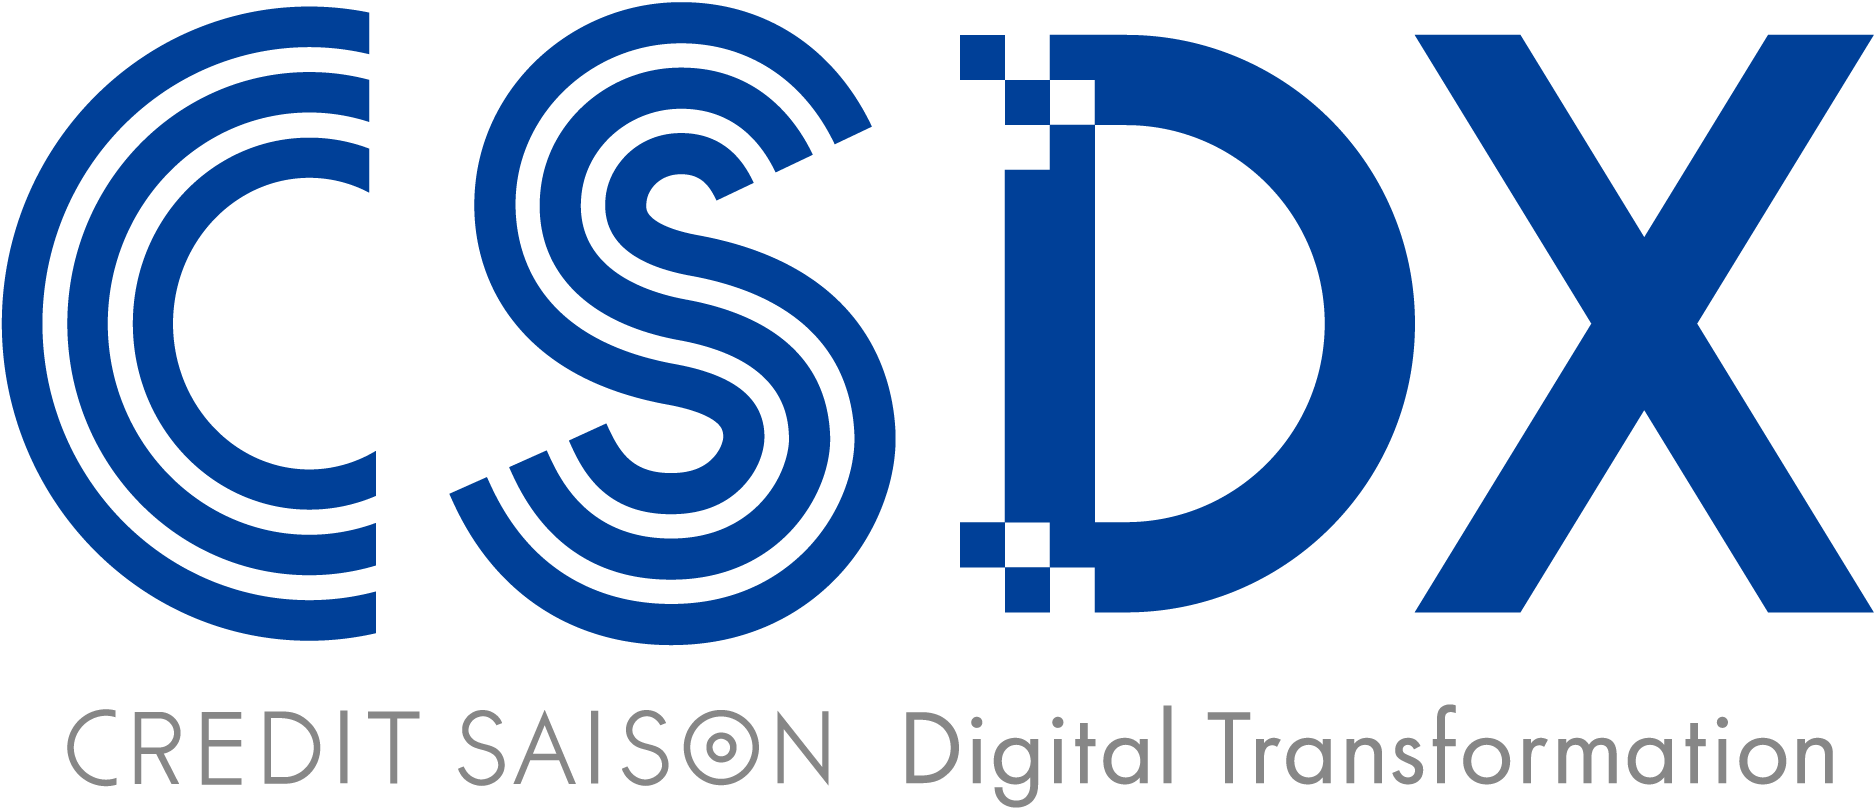 CSDX CREDIT SAISON Digital Transformation